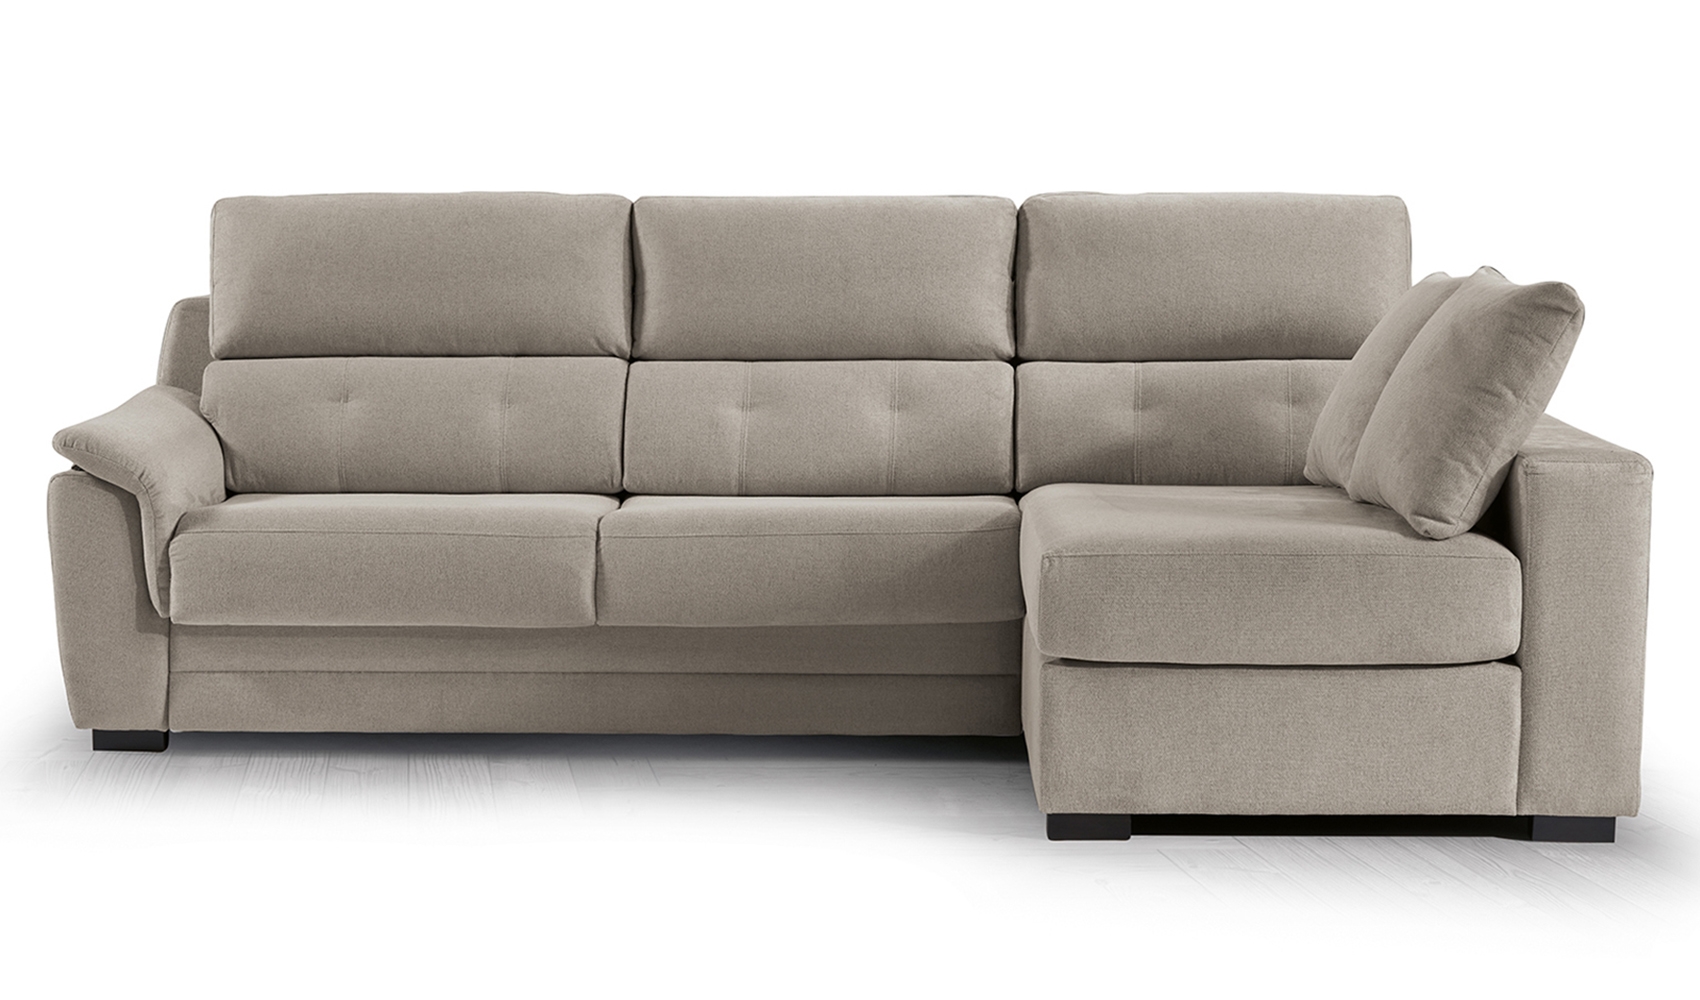 Vigo Chaiselongue sofa bed